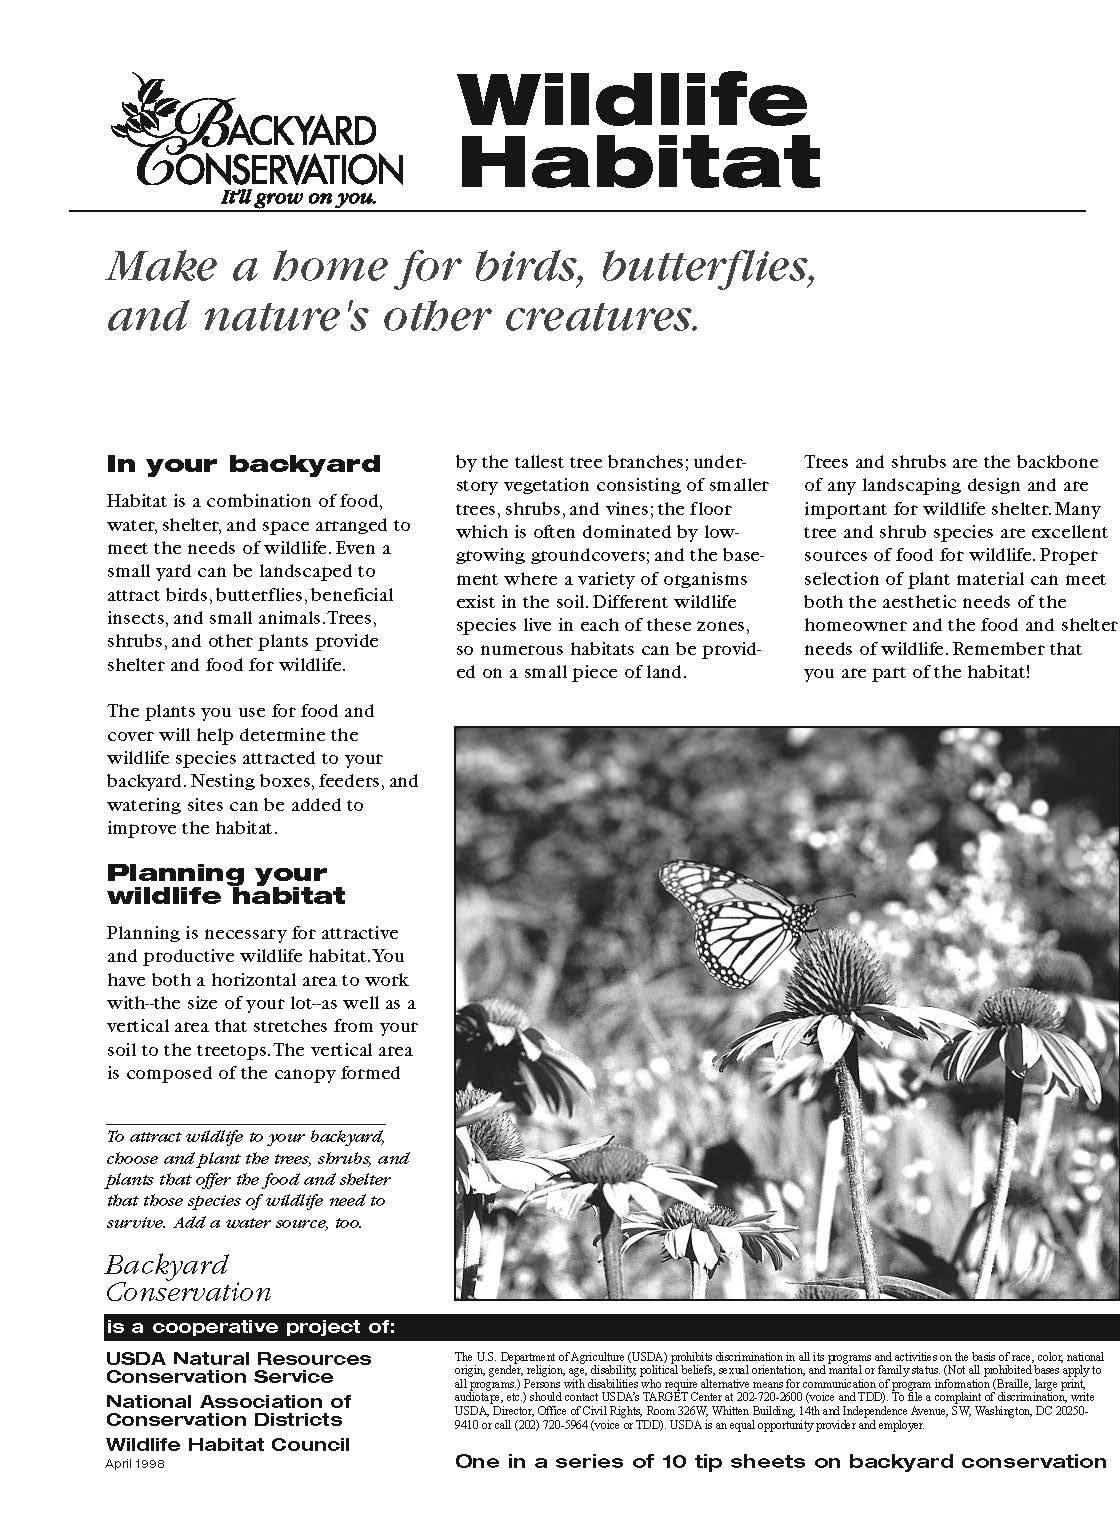 Backyard Conservation Wildlife Habitat tip sheet